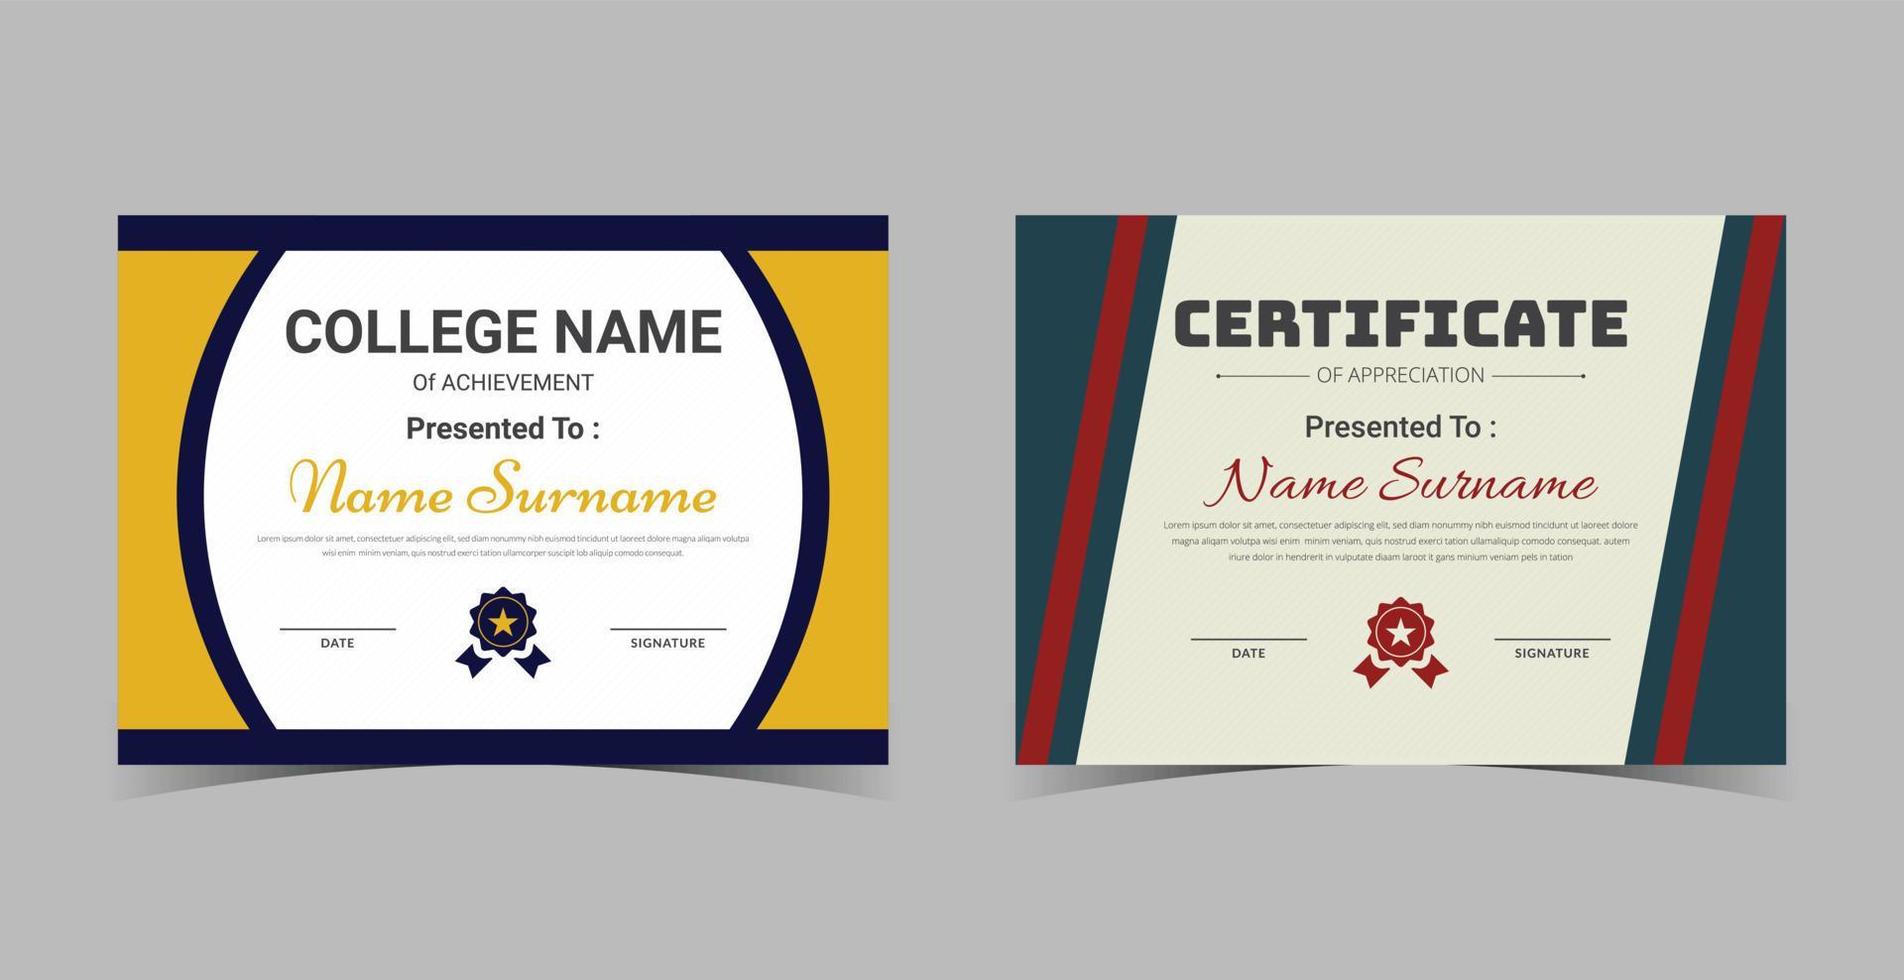 modelo de certificado de diploma profissional, modelo de certificado de reconhecimento, certificado de realização, modelo de diploma de prêmios vetor